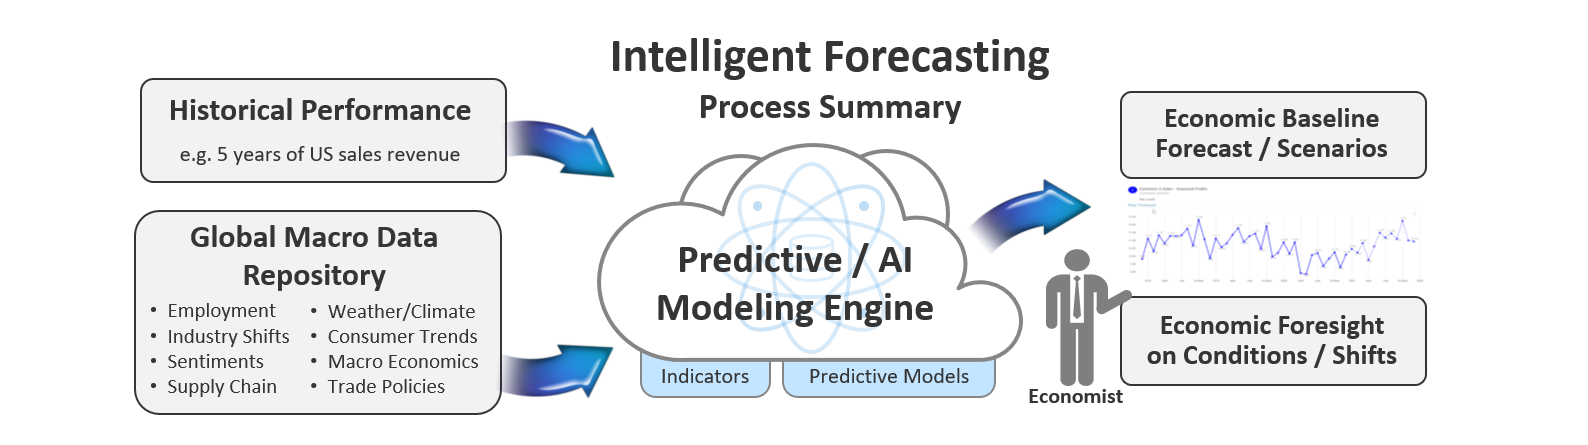 Intelligent forecasting process infographic.